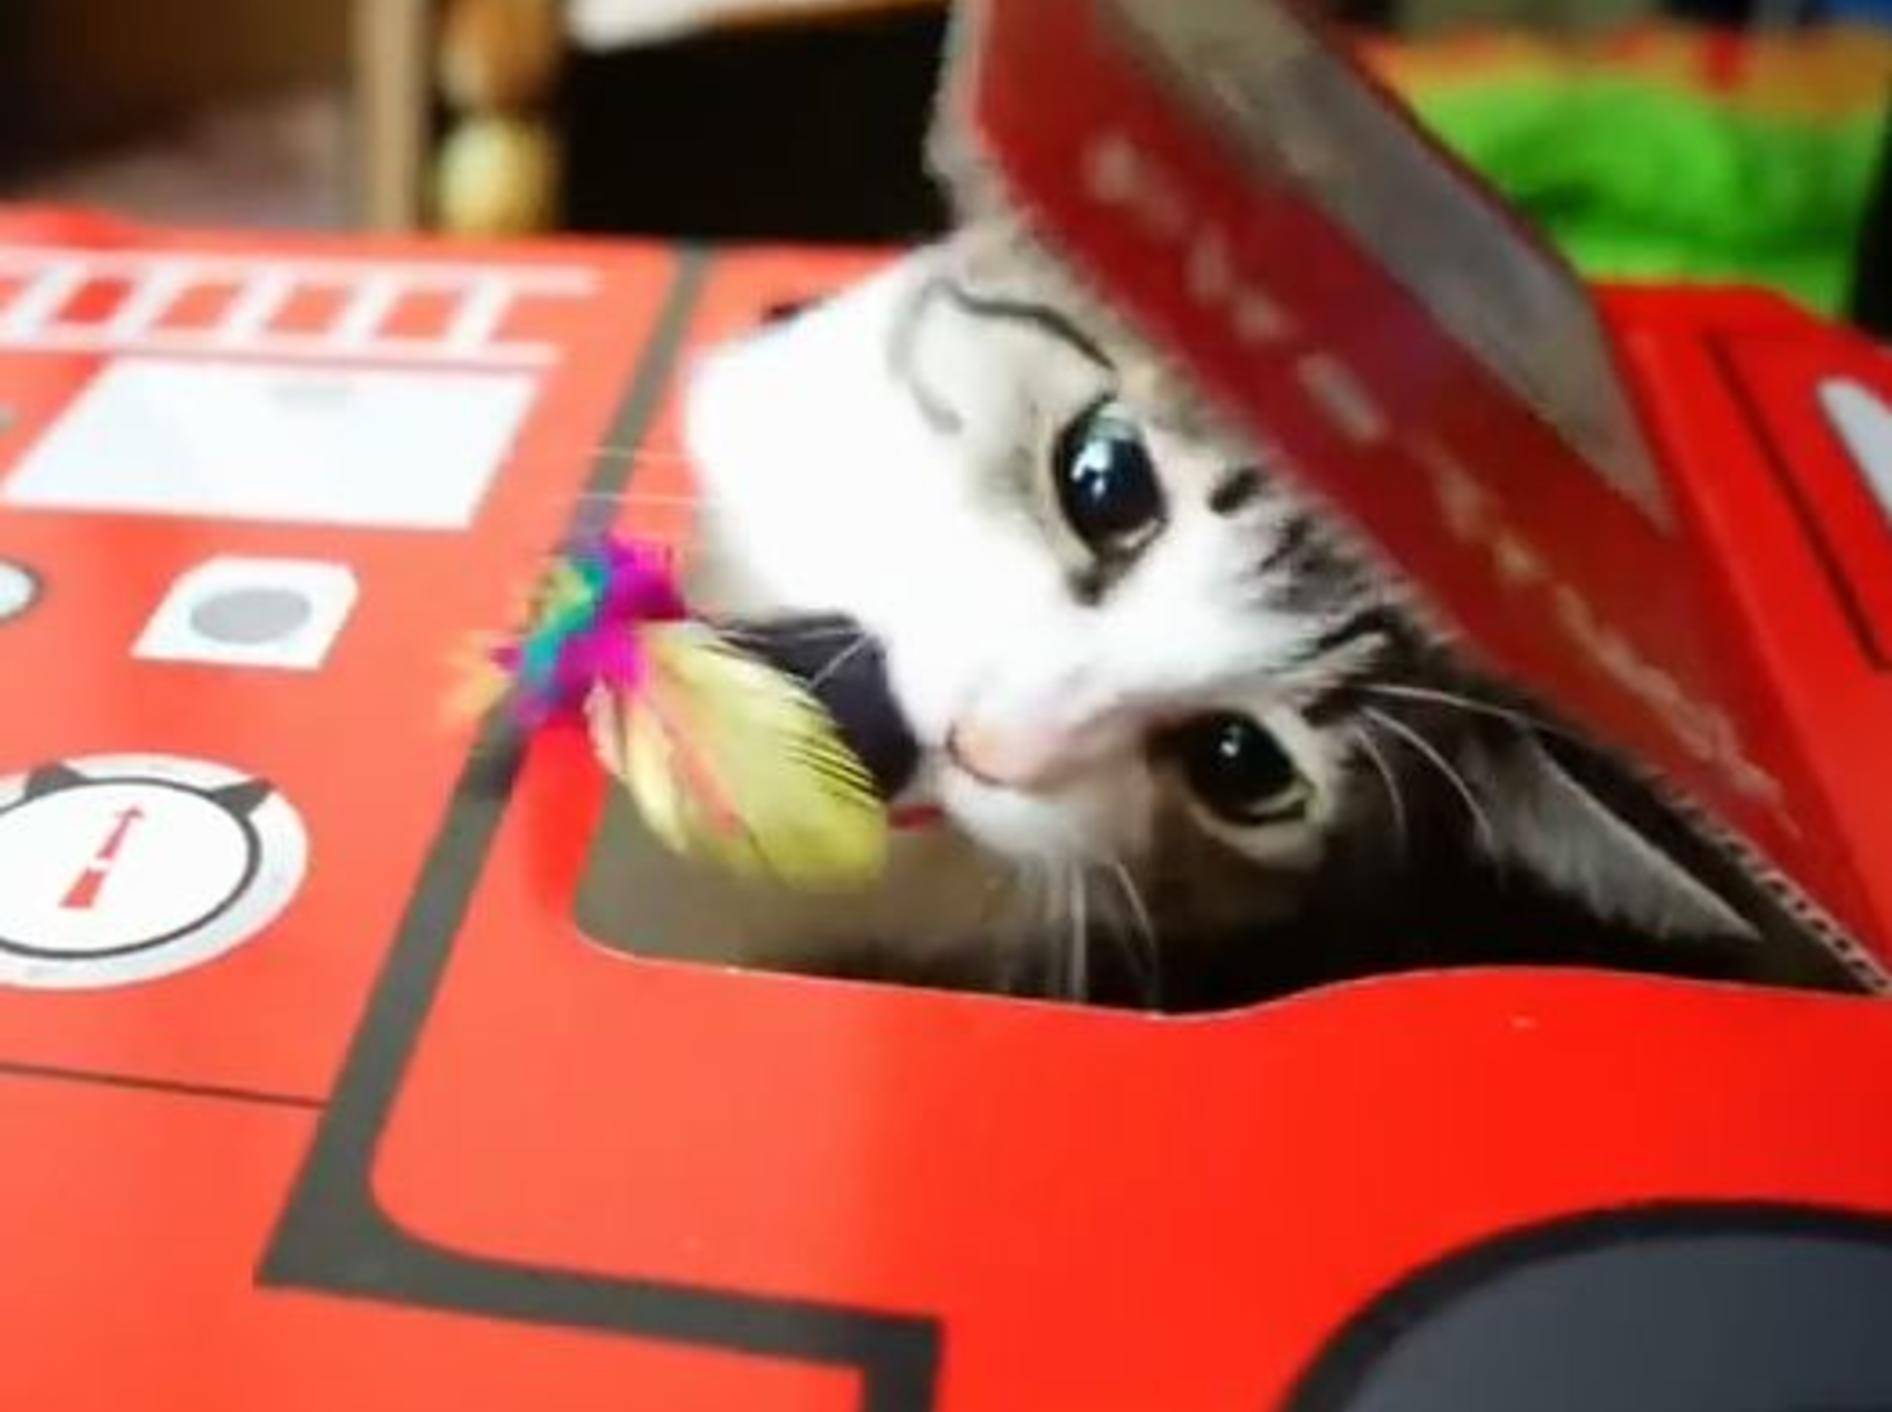 Katze Ohagi beim Spielen: "Ich bin so schlau!" – Bild: Shutterstock / MAKO0MAKO0